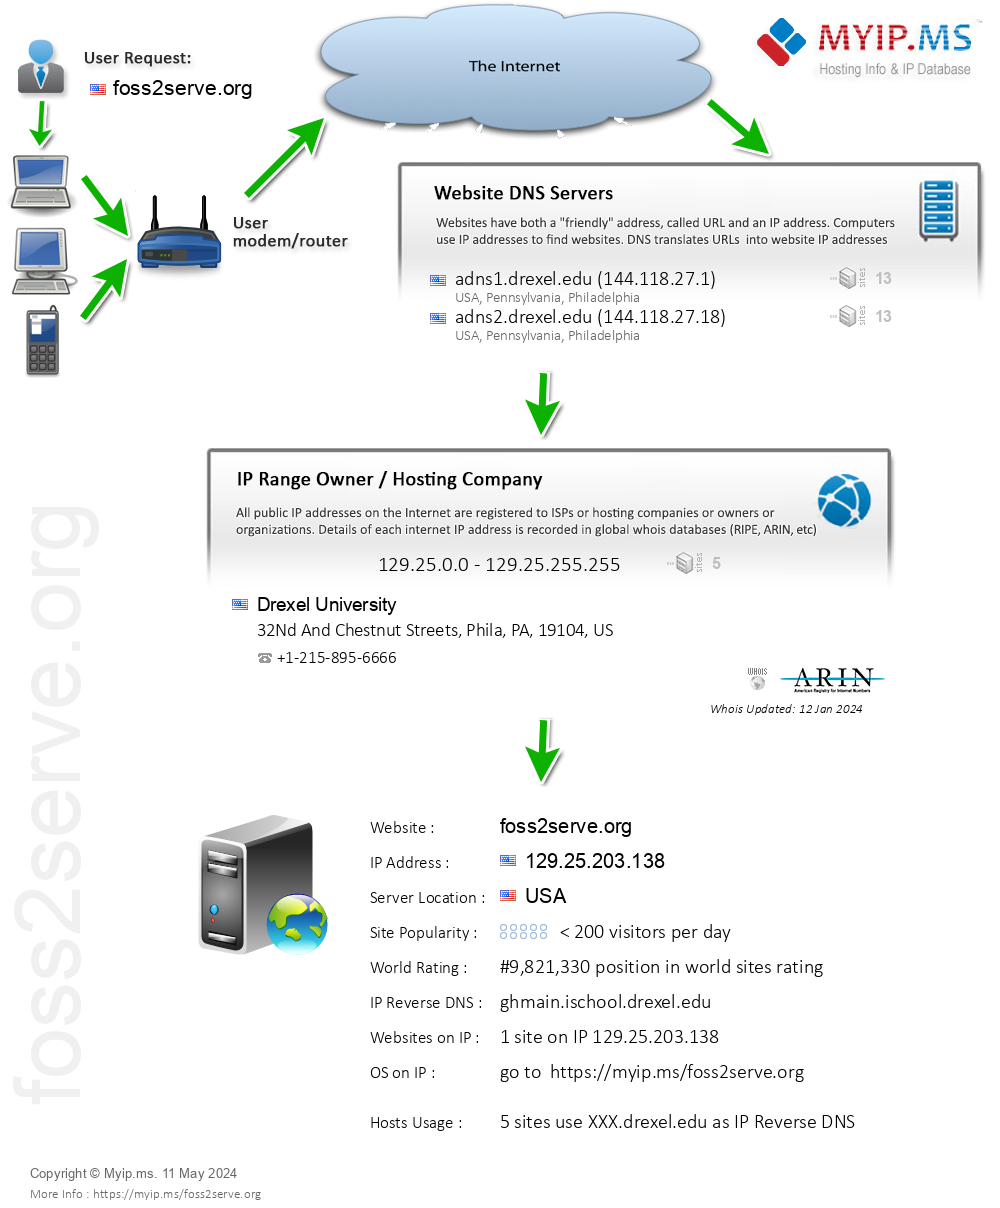 Foss2serve.org - Website Hosting Visual IP Diagram